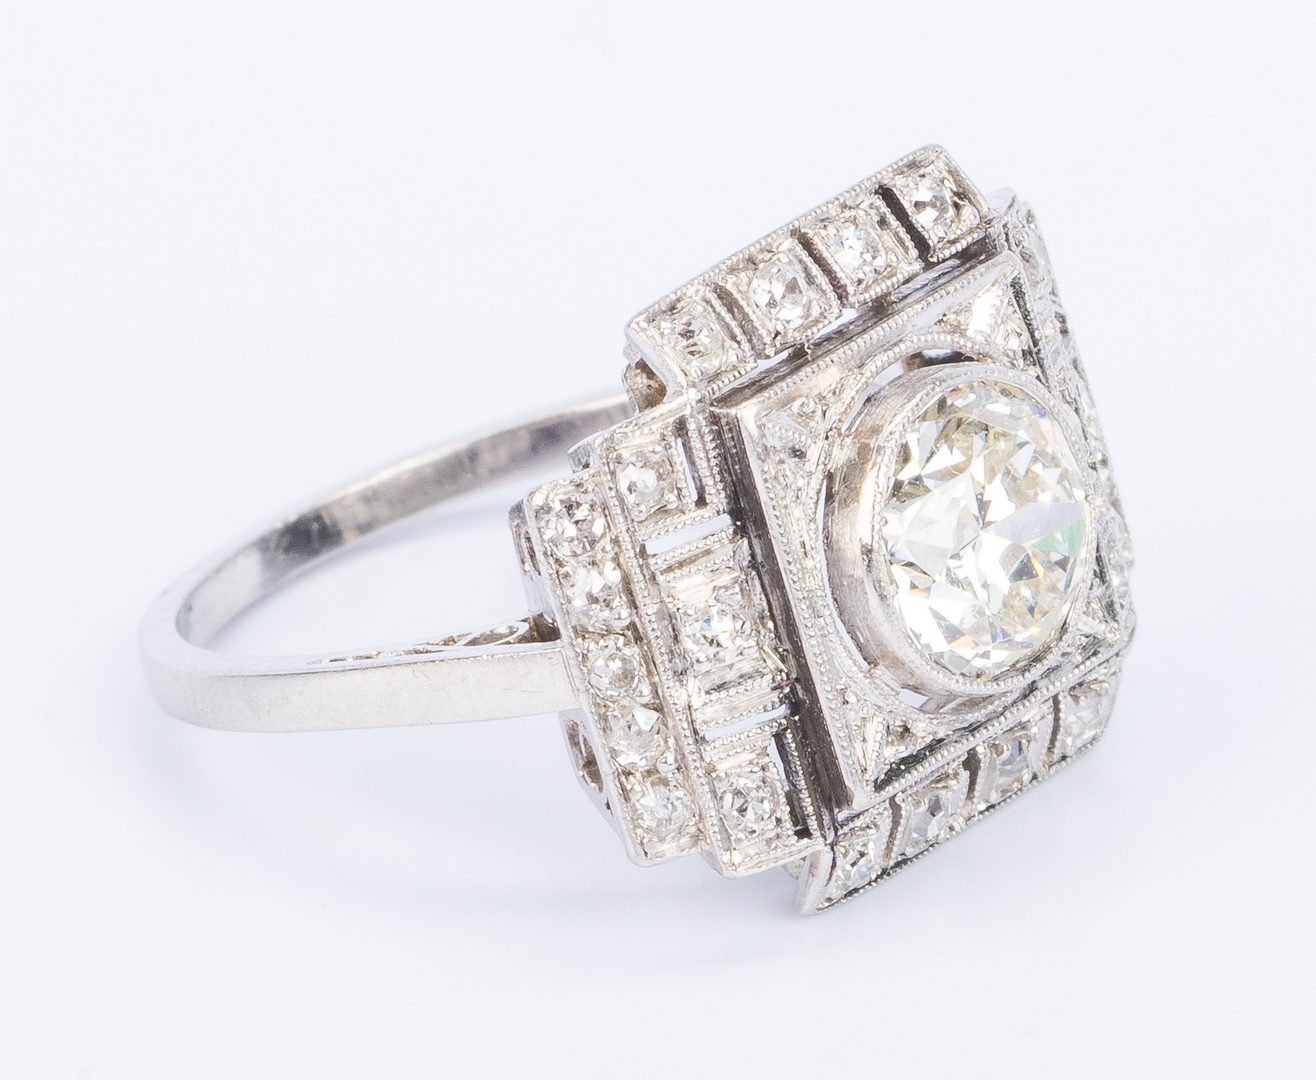 Lot 26: Art Deco Plat Diamond Ring, 1.42 ctw